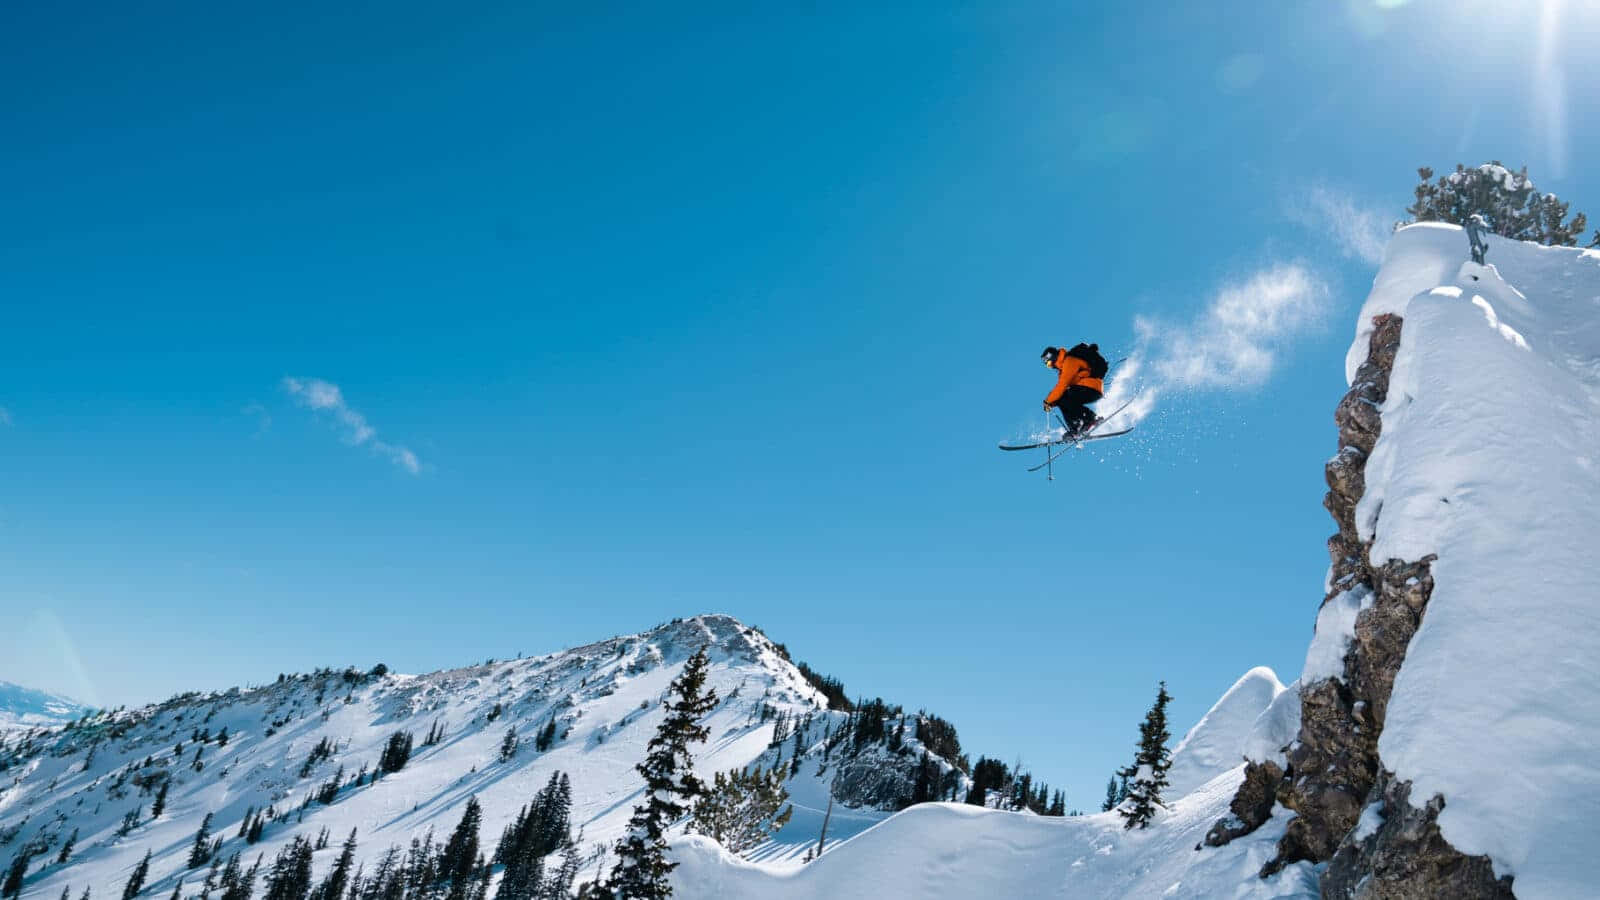 Skier gliding smoothly down the mountain